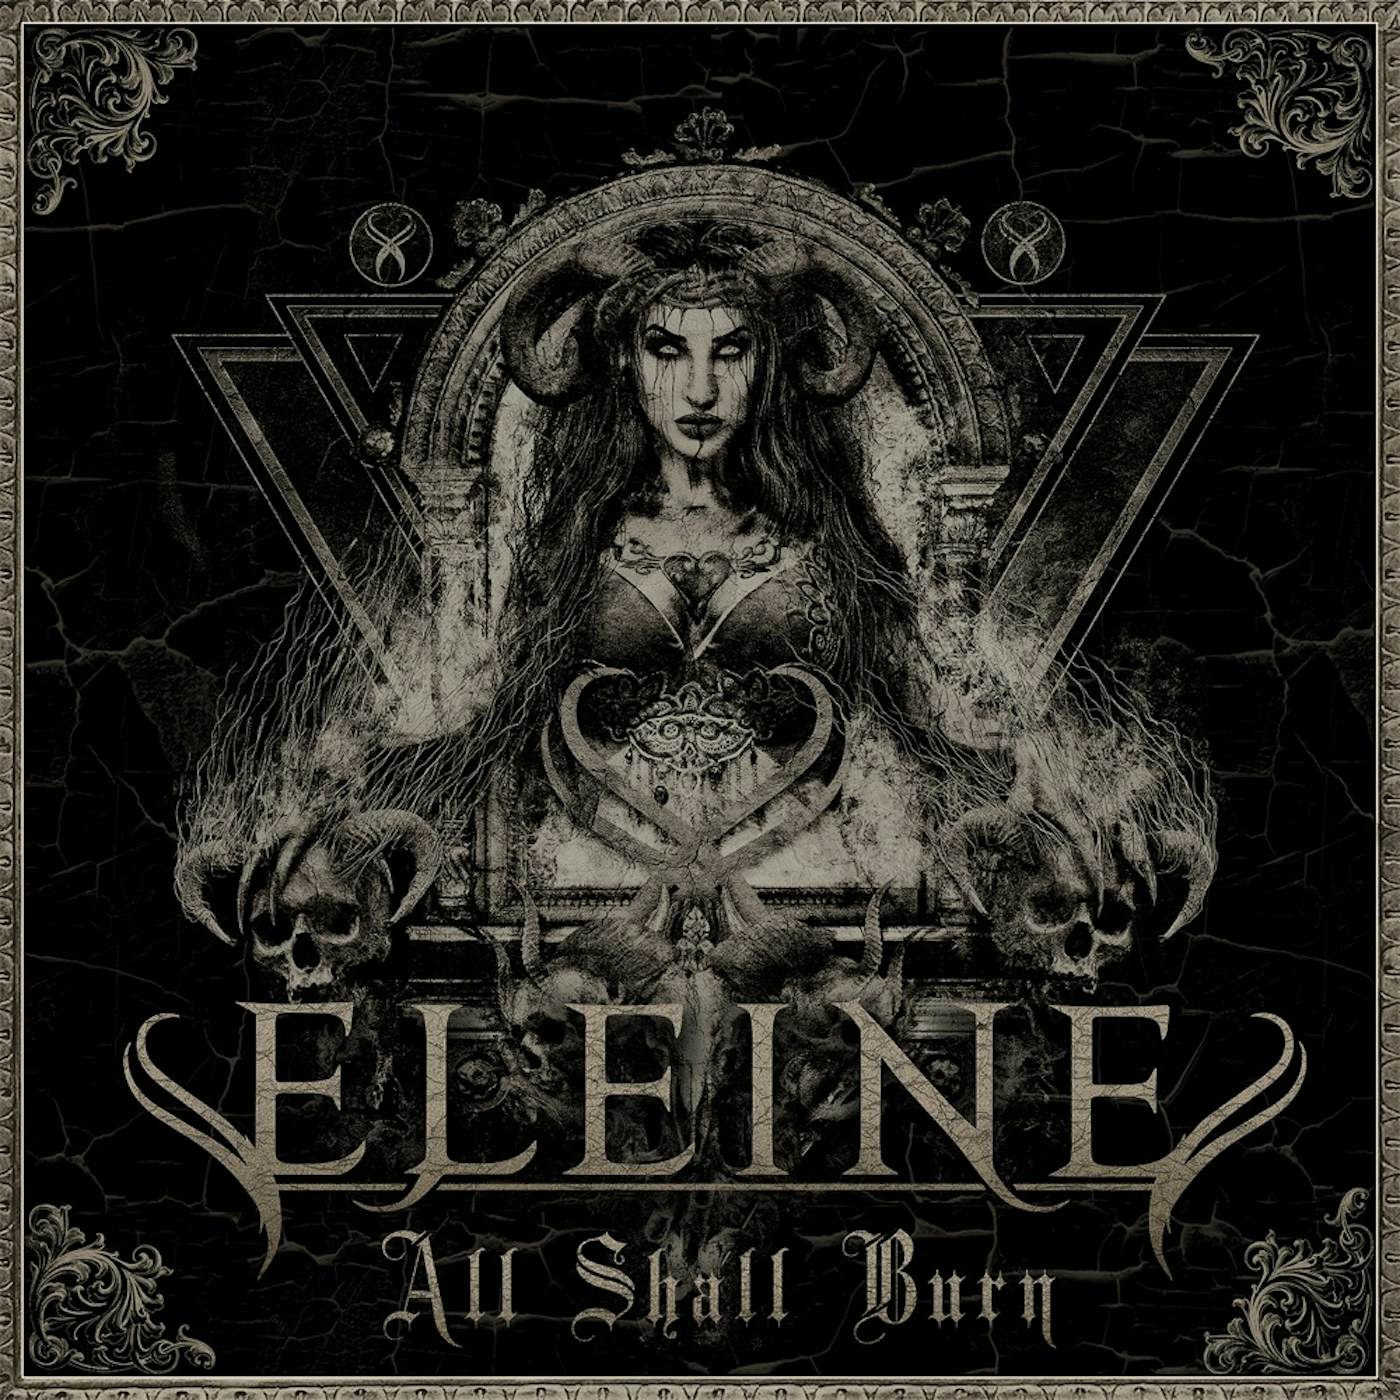 Eleine All shall burn CD